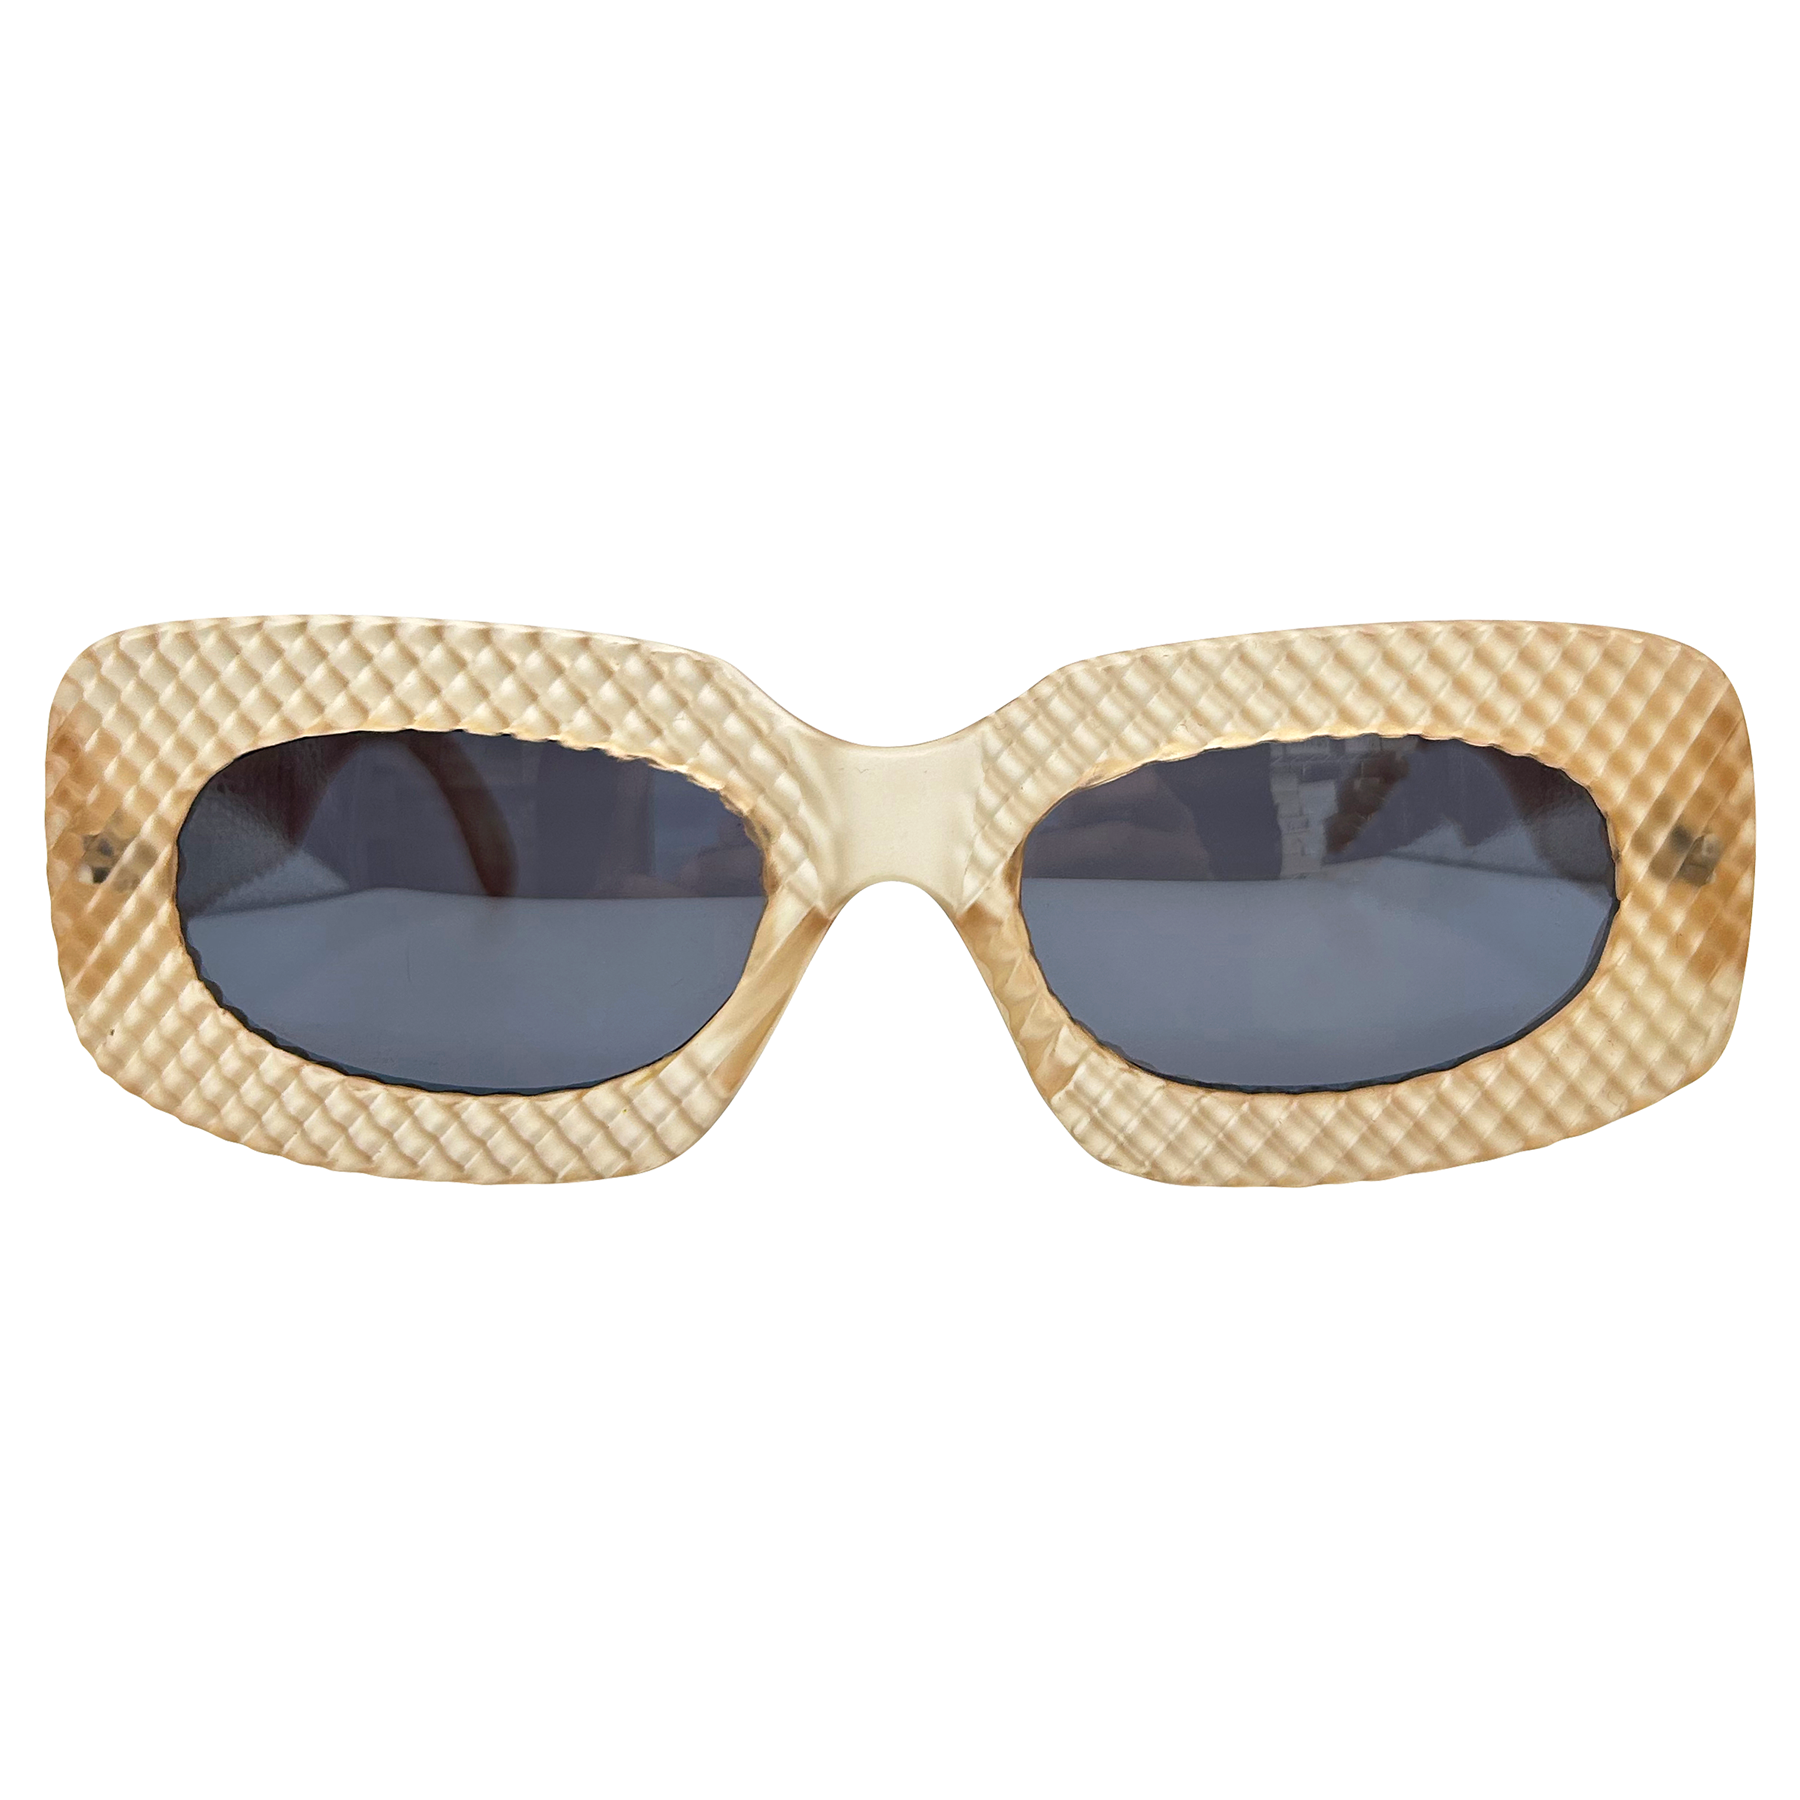 HONEYCOMB Tan Square 90s Sunglasses